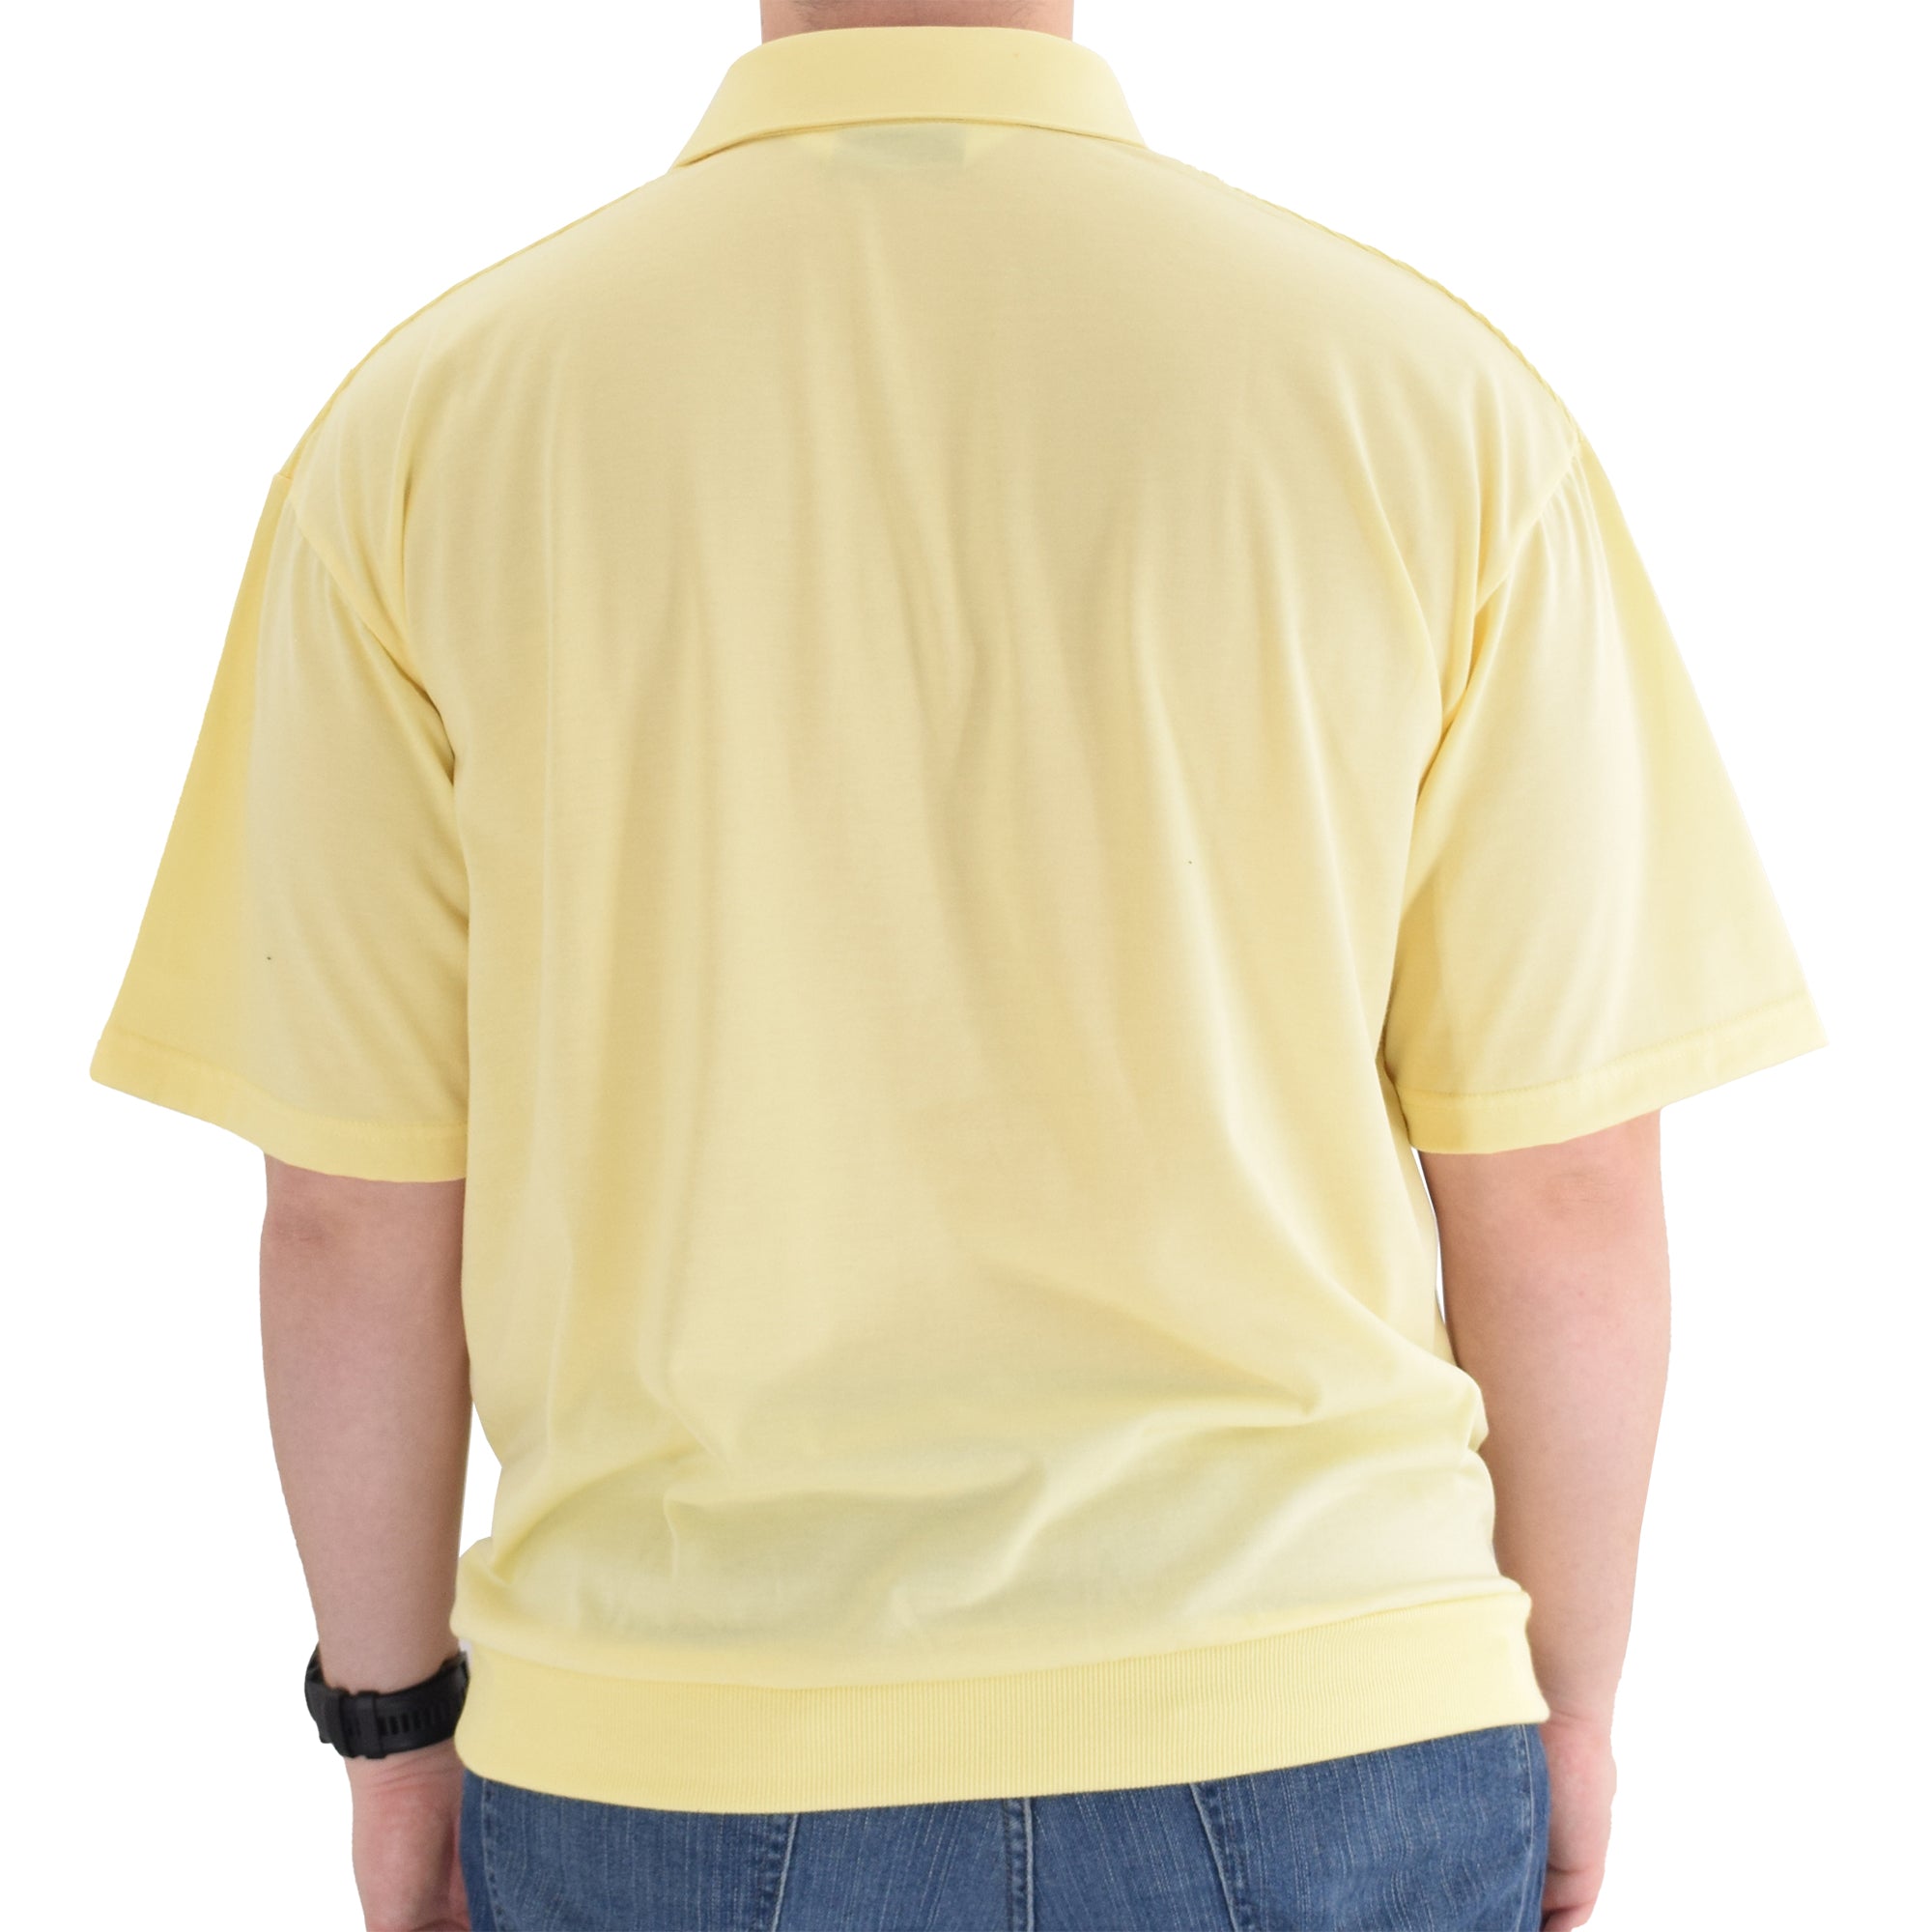 Classics by Palmland Two Pocket Knit Short Sleeve Banded Bottom Shirt Yellow 6010-656 - theflagshirt